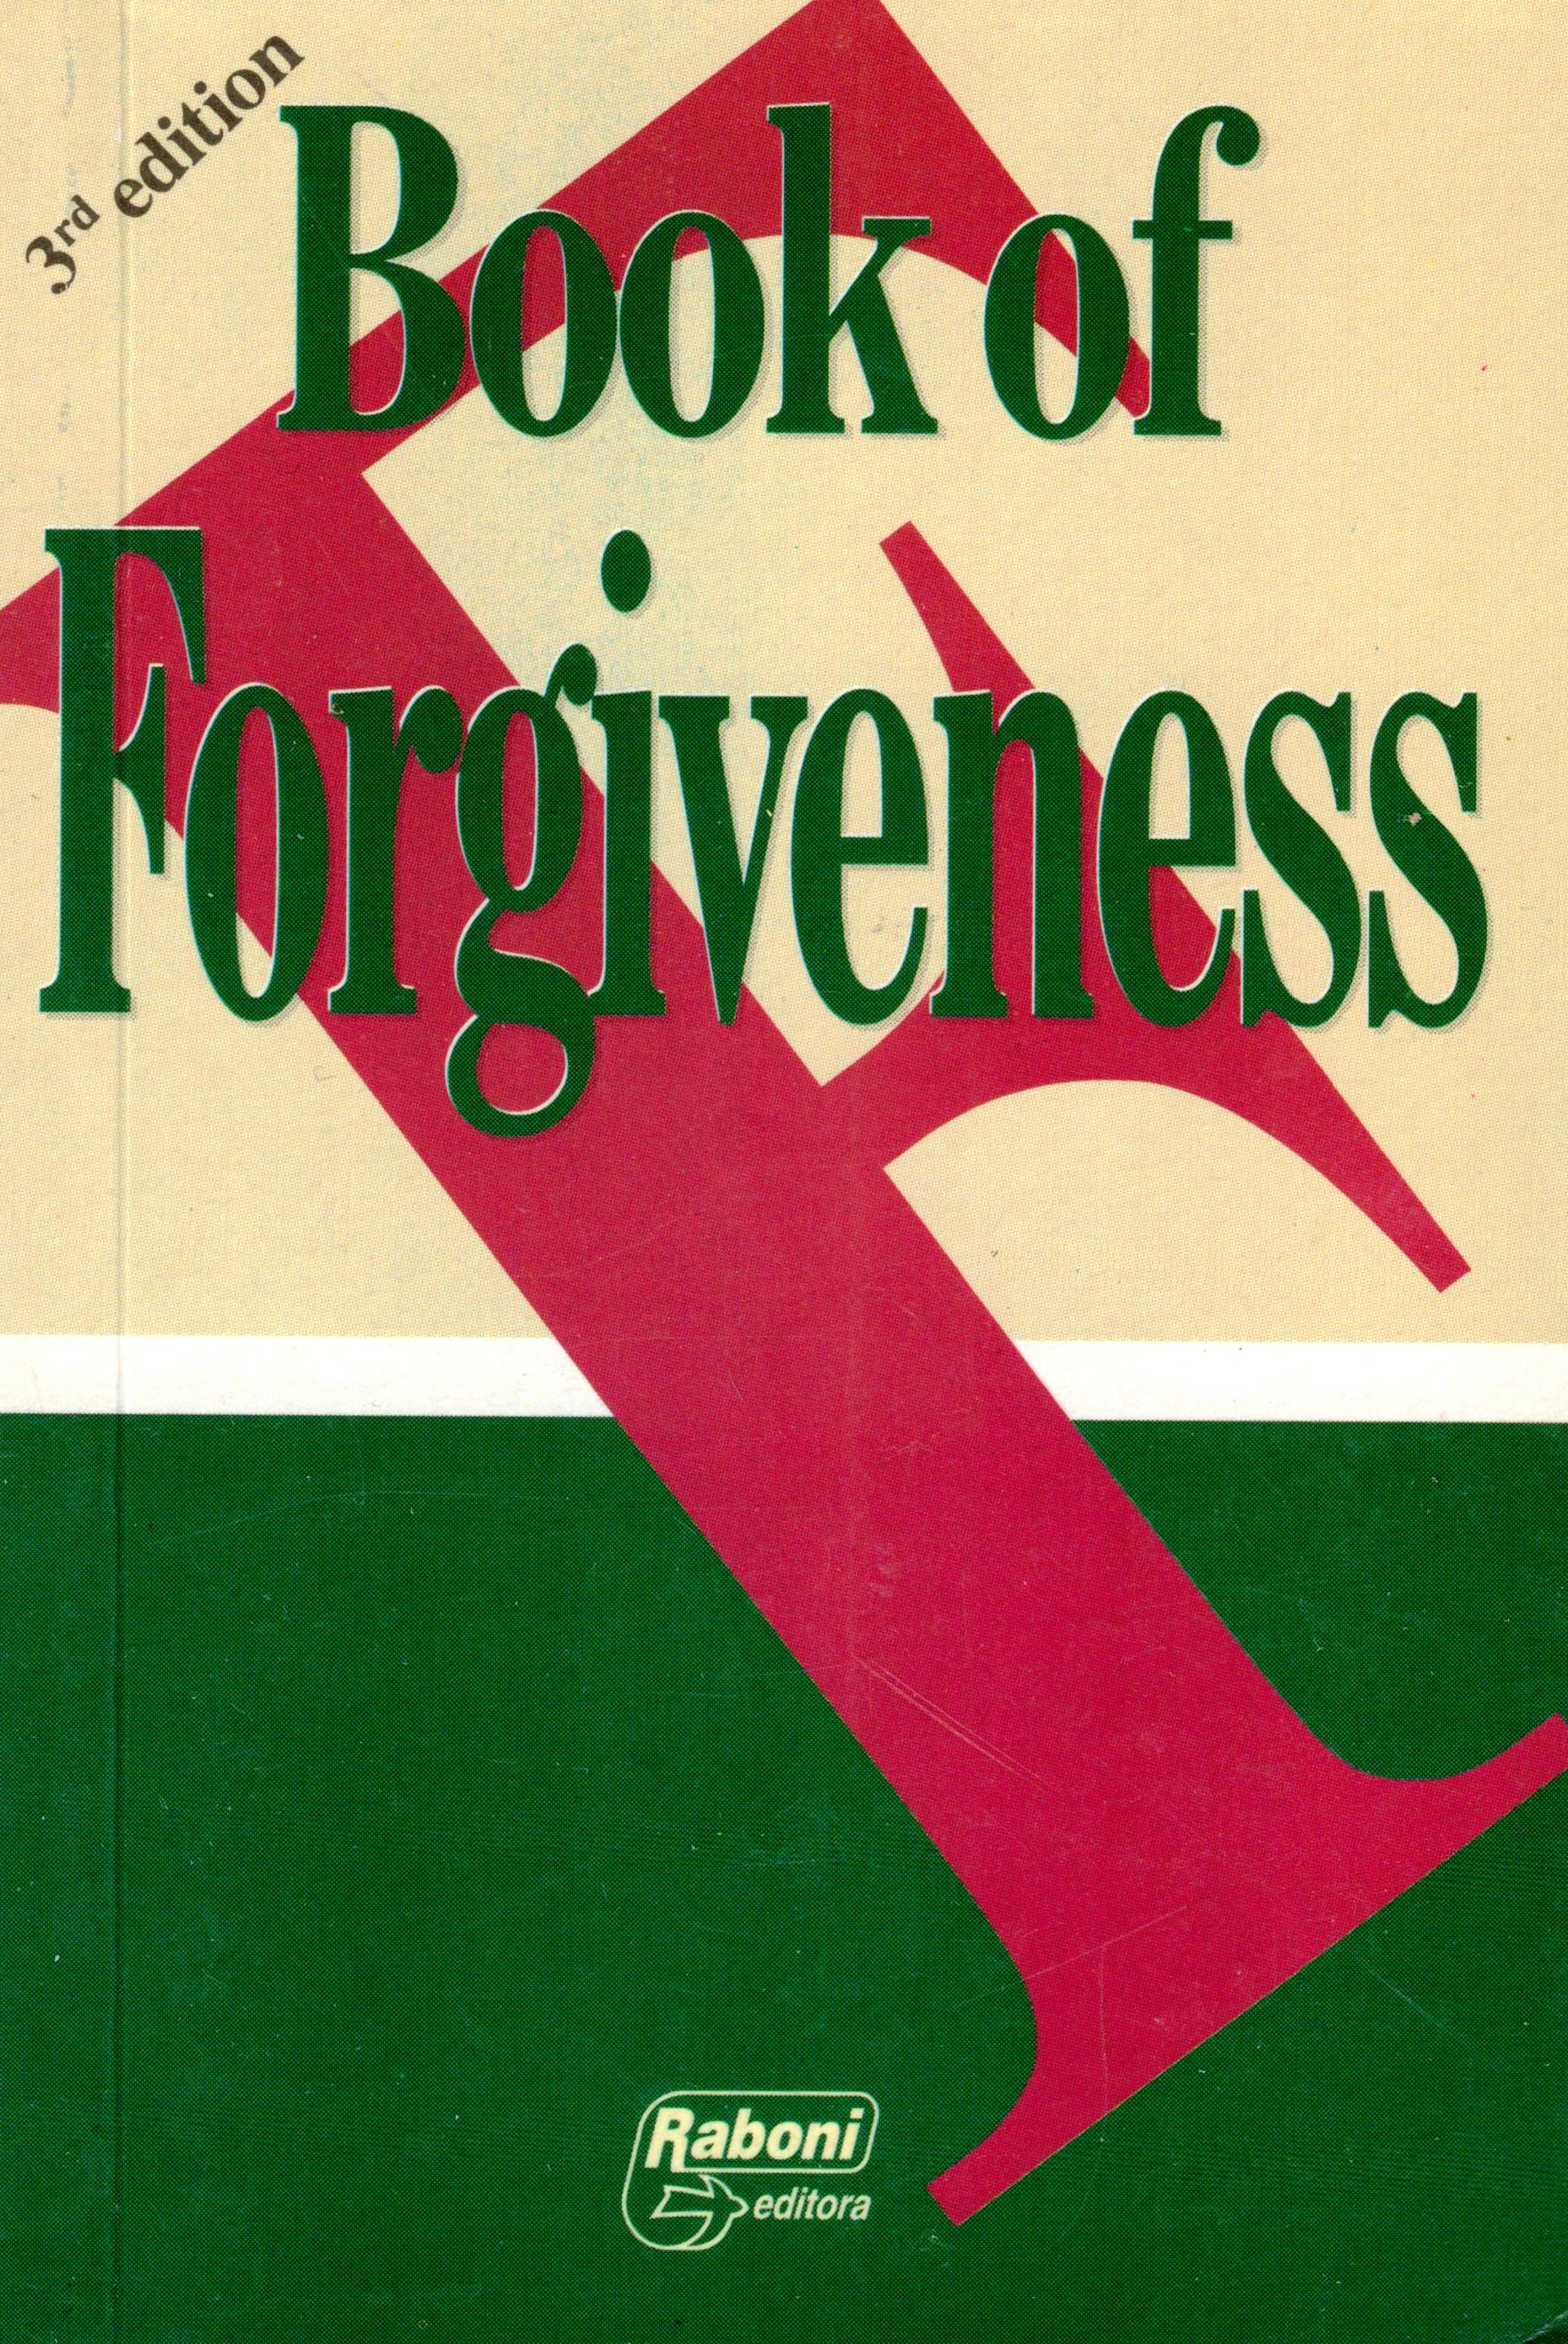 Book of Forgiveness